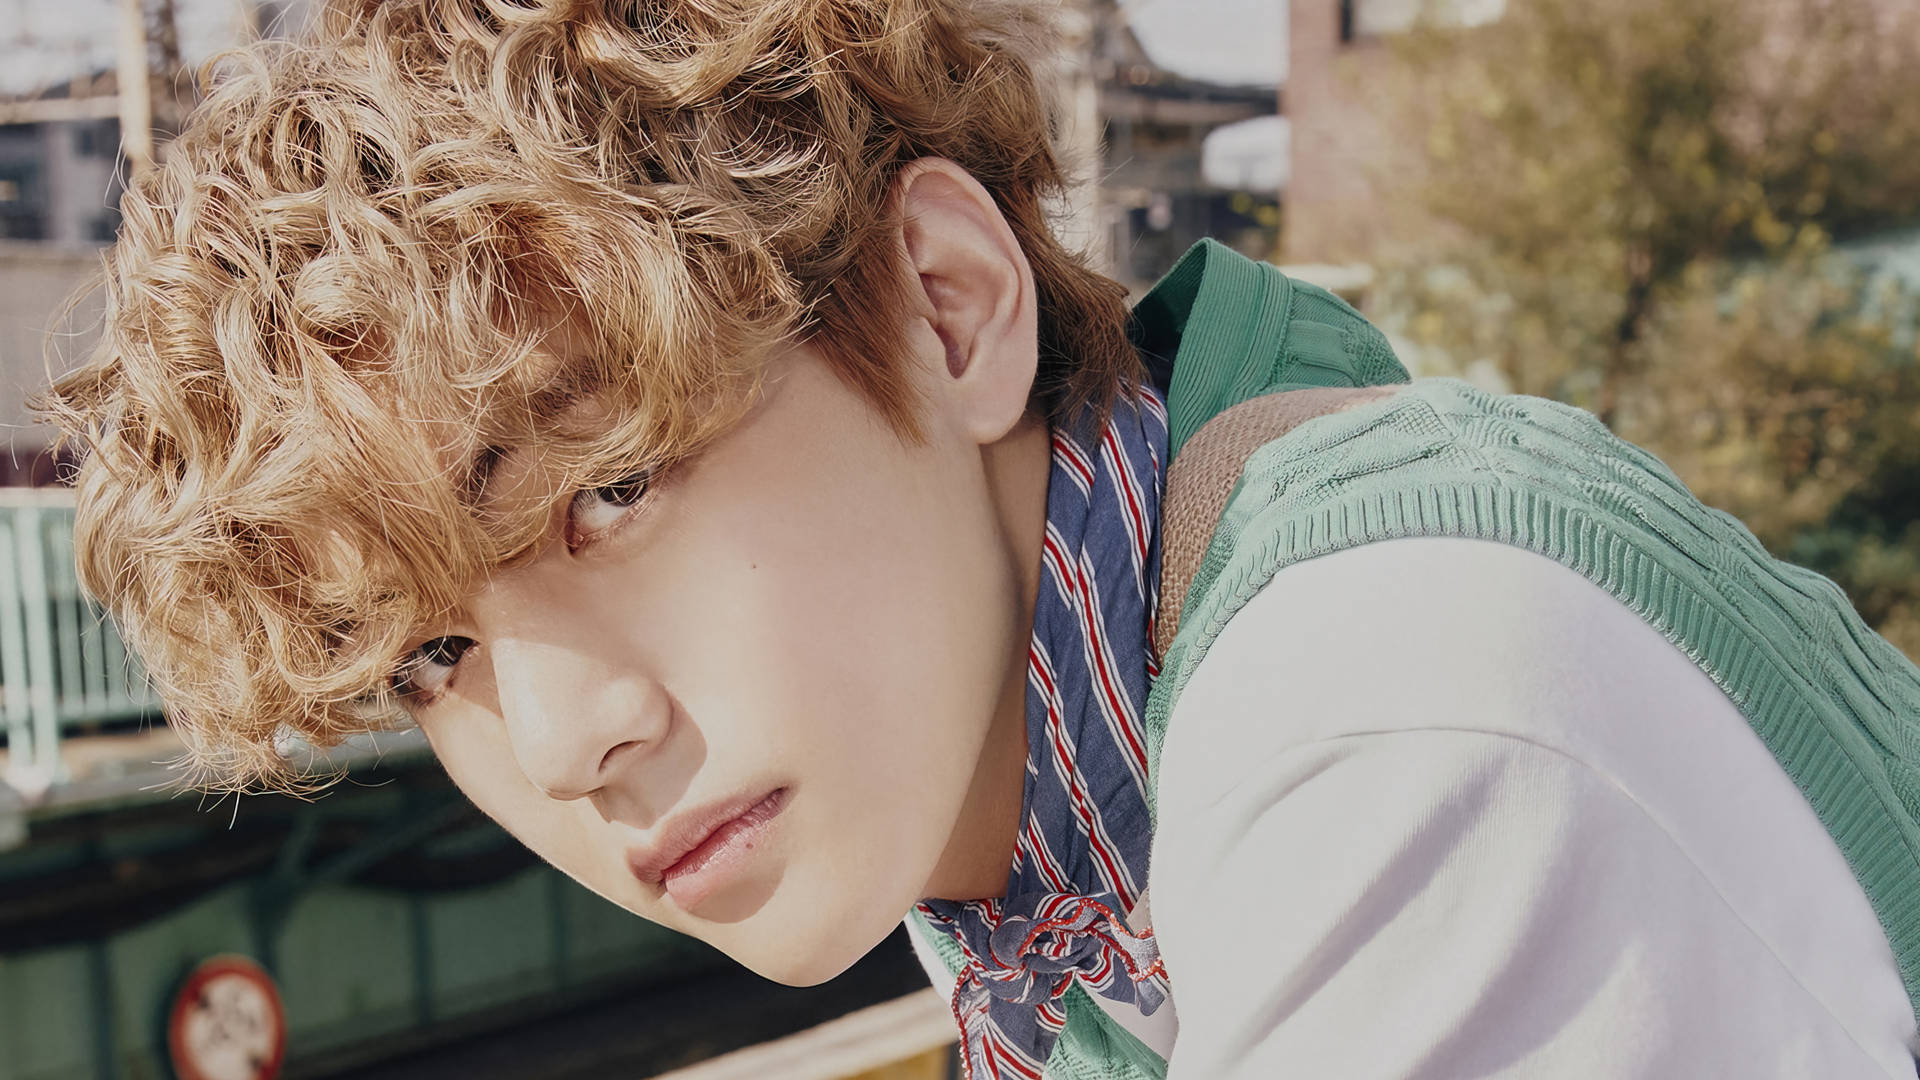 Download Bts Tae Hyung Curly Blonde Hair Wallpaper 